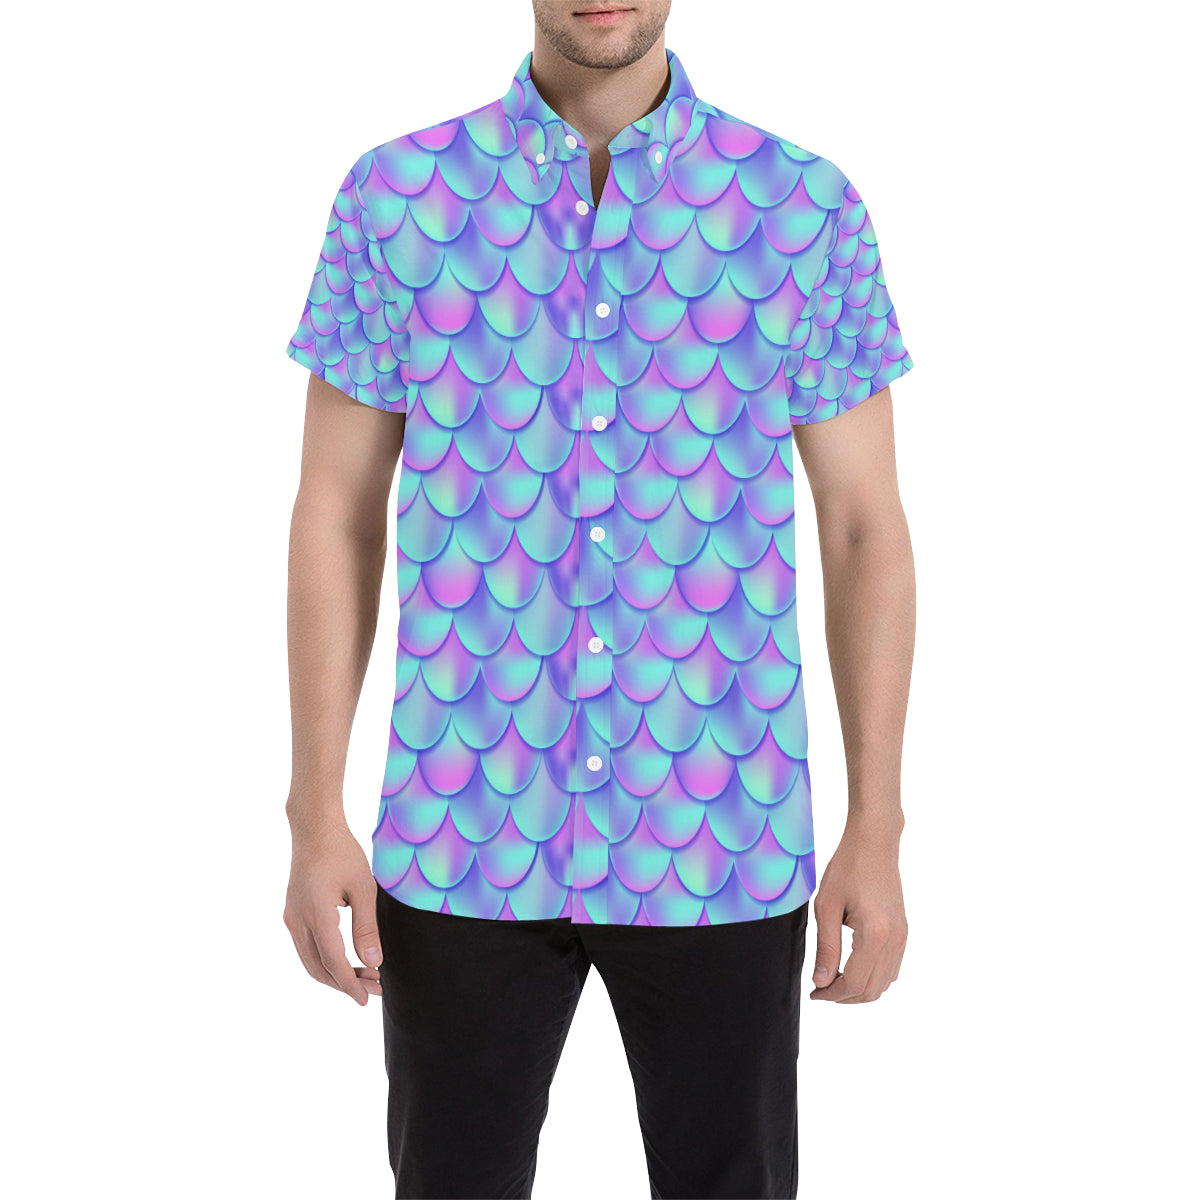 Mermaid Tail Design Print Pattern Men's Short Sleeve Button Up Shirt